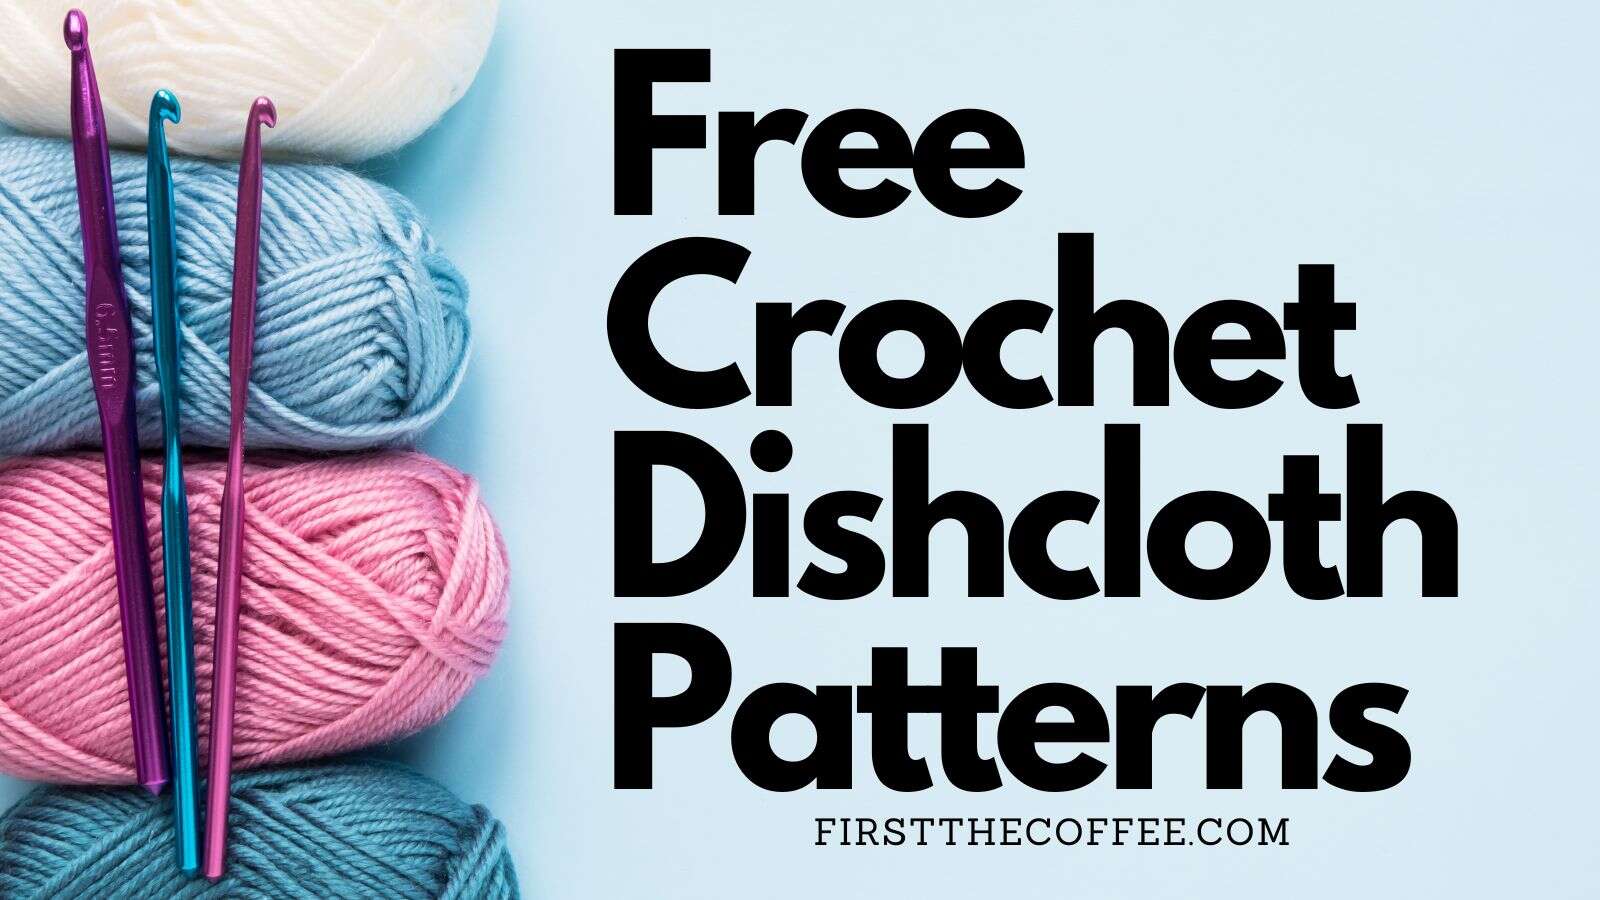 https://firstthecoffee.com/wp-content/uploads/2020/03/Free-Crochet-Dishcoth-Patterns-1600x900.jpg